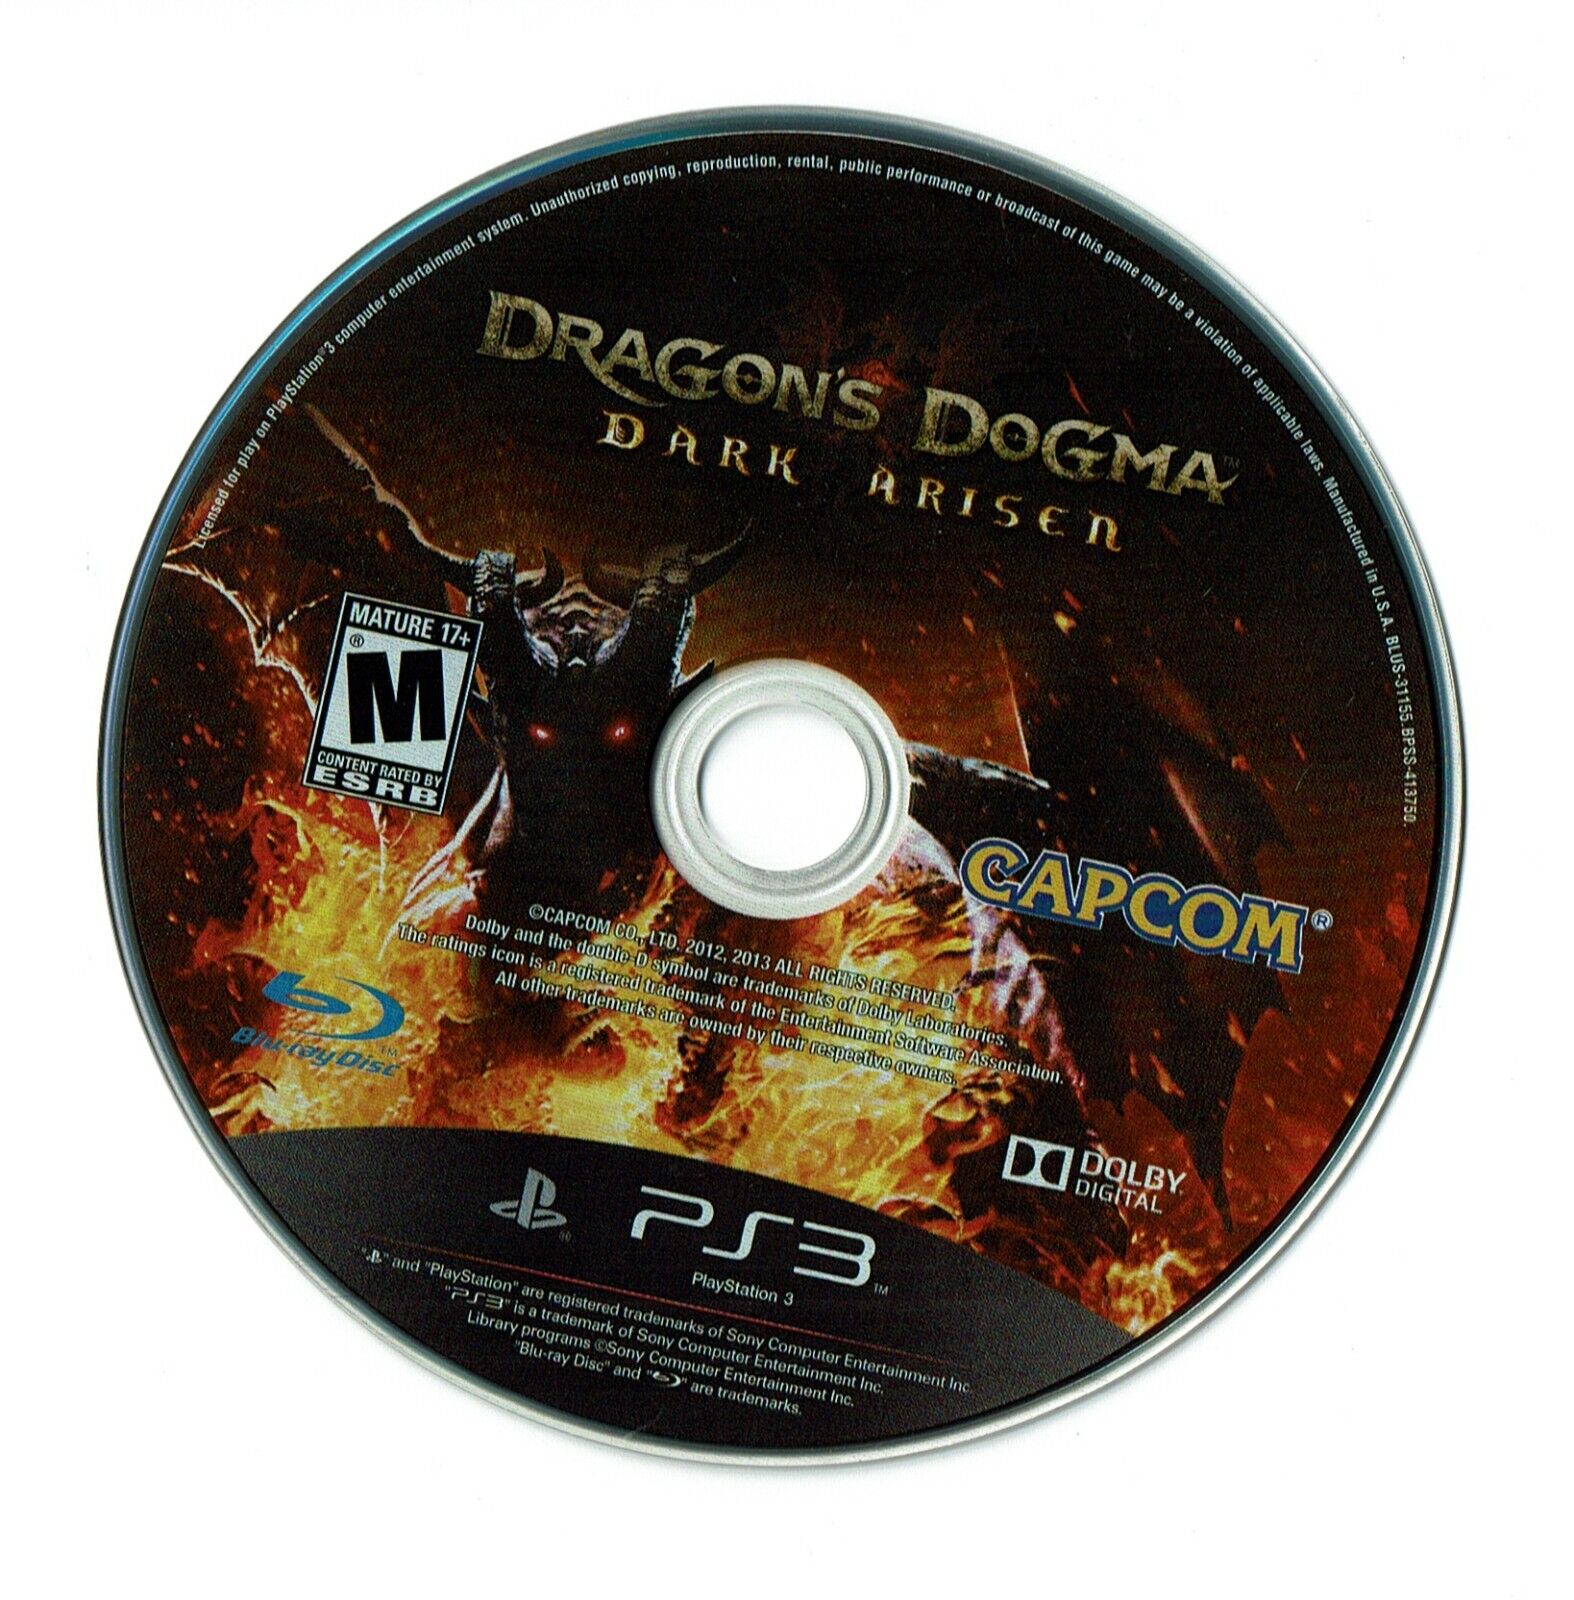 PS3 - Dragon's Dogma: Dark Arisen - Used